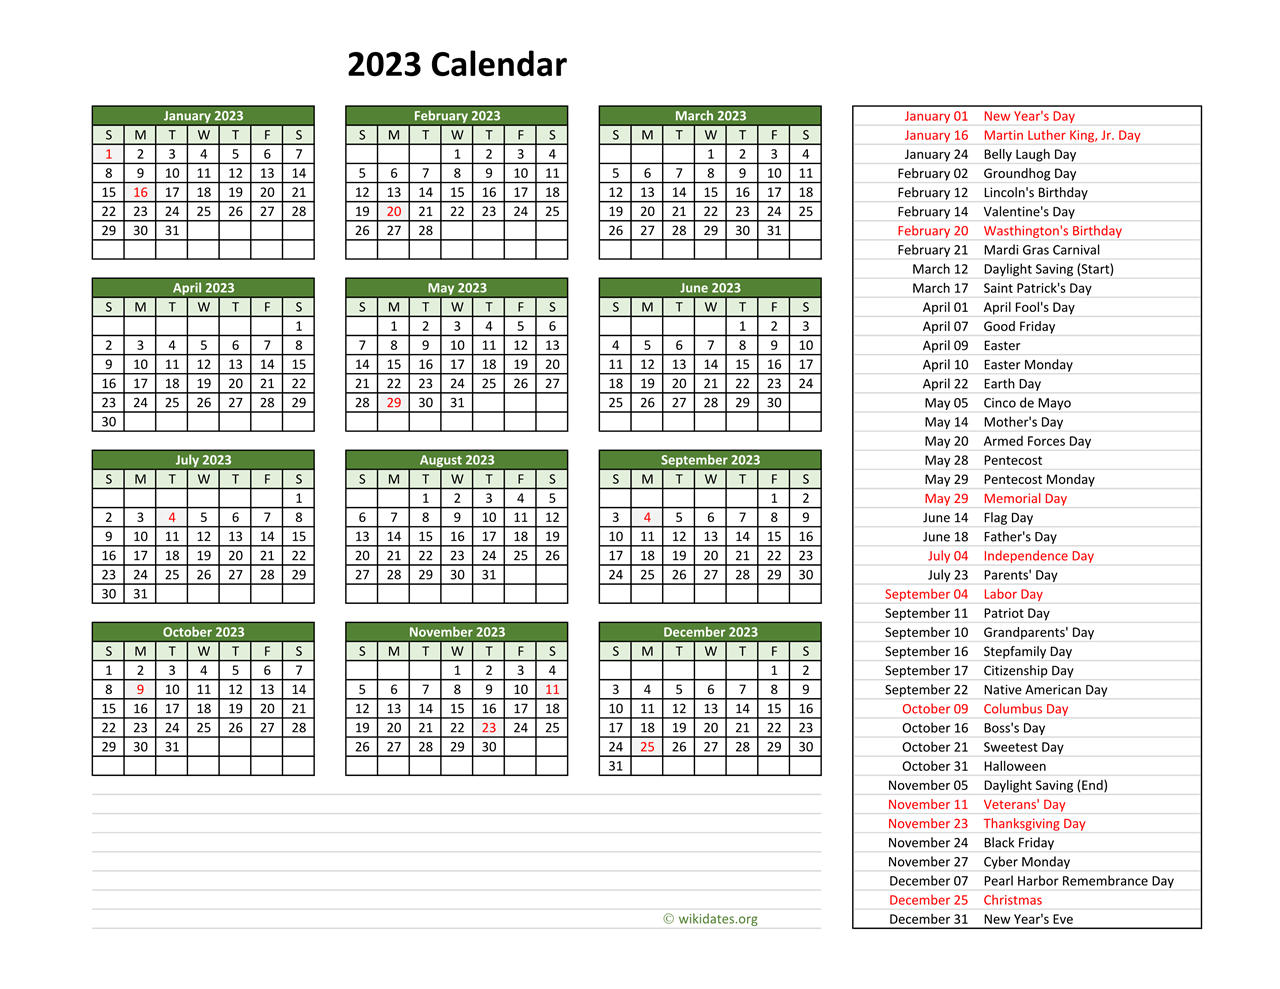 2023-calendar-with-us-holidays-wikidates